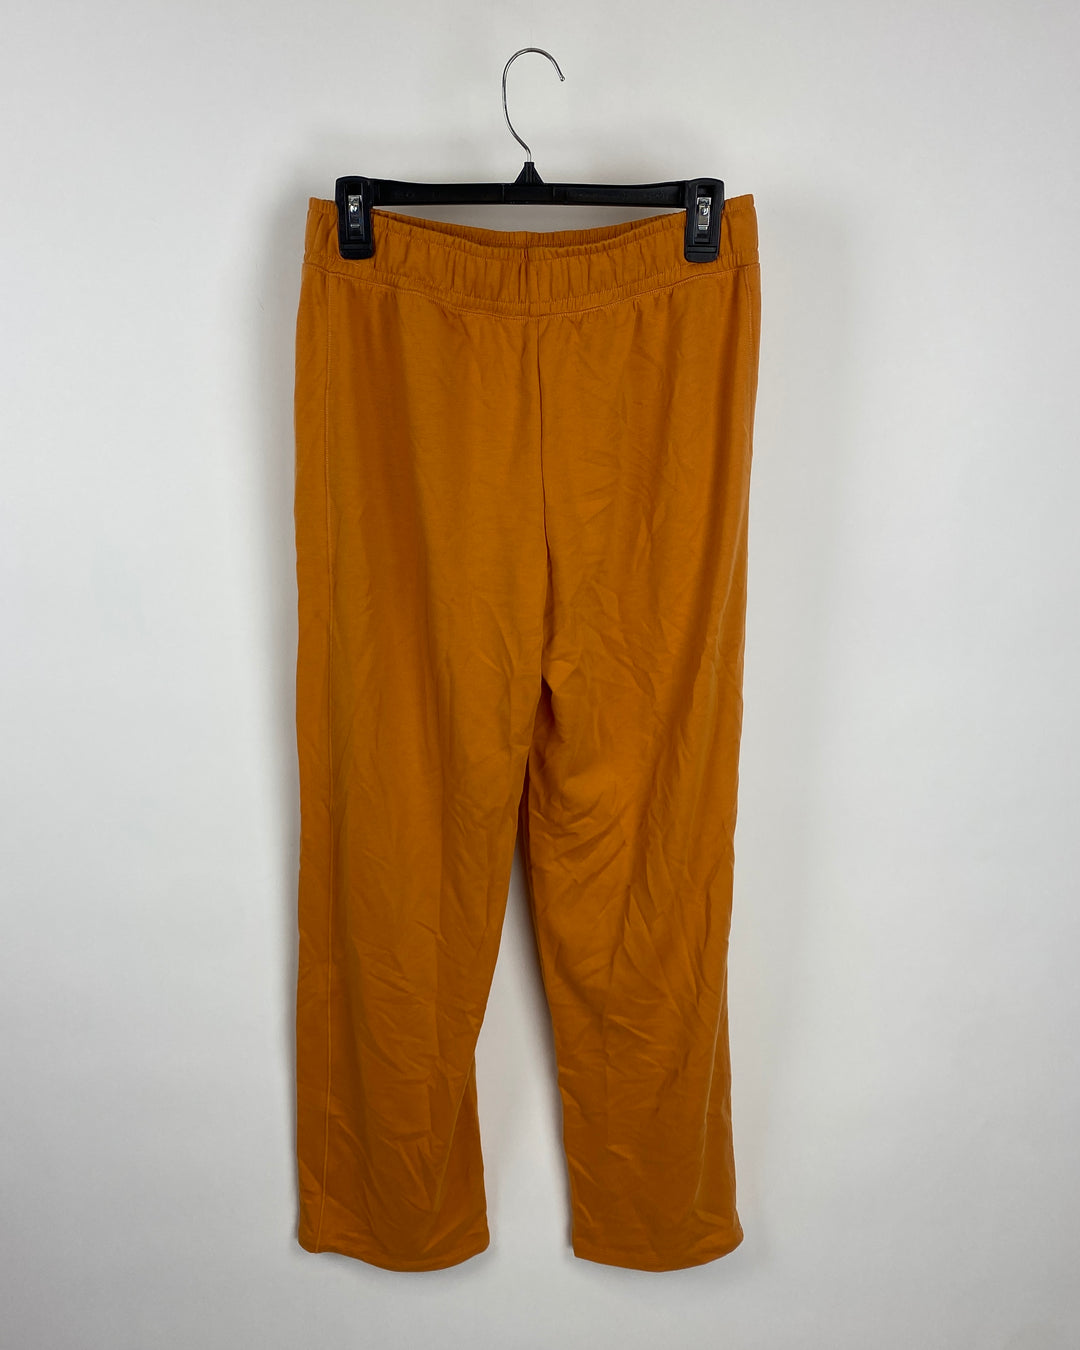 Orange Wide Leg Bottoms - Size 6/8